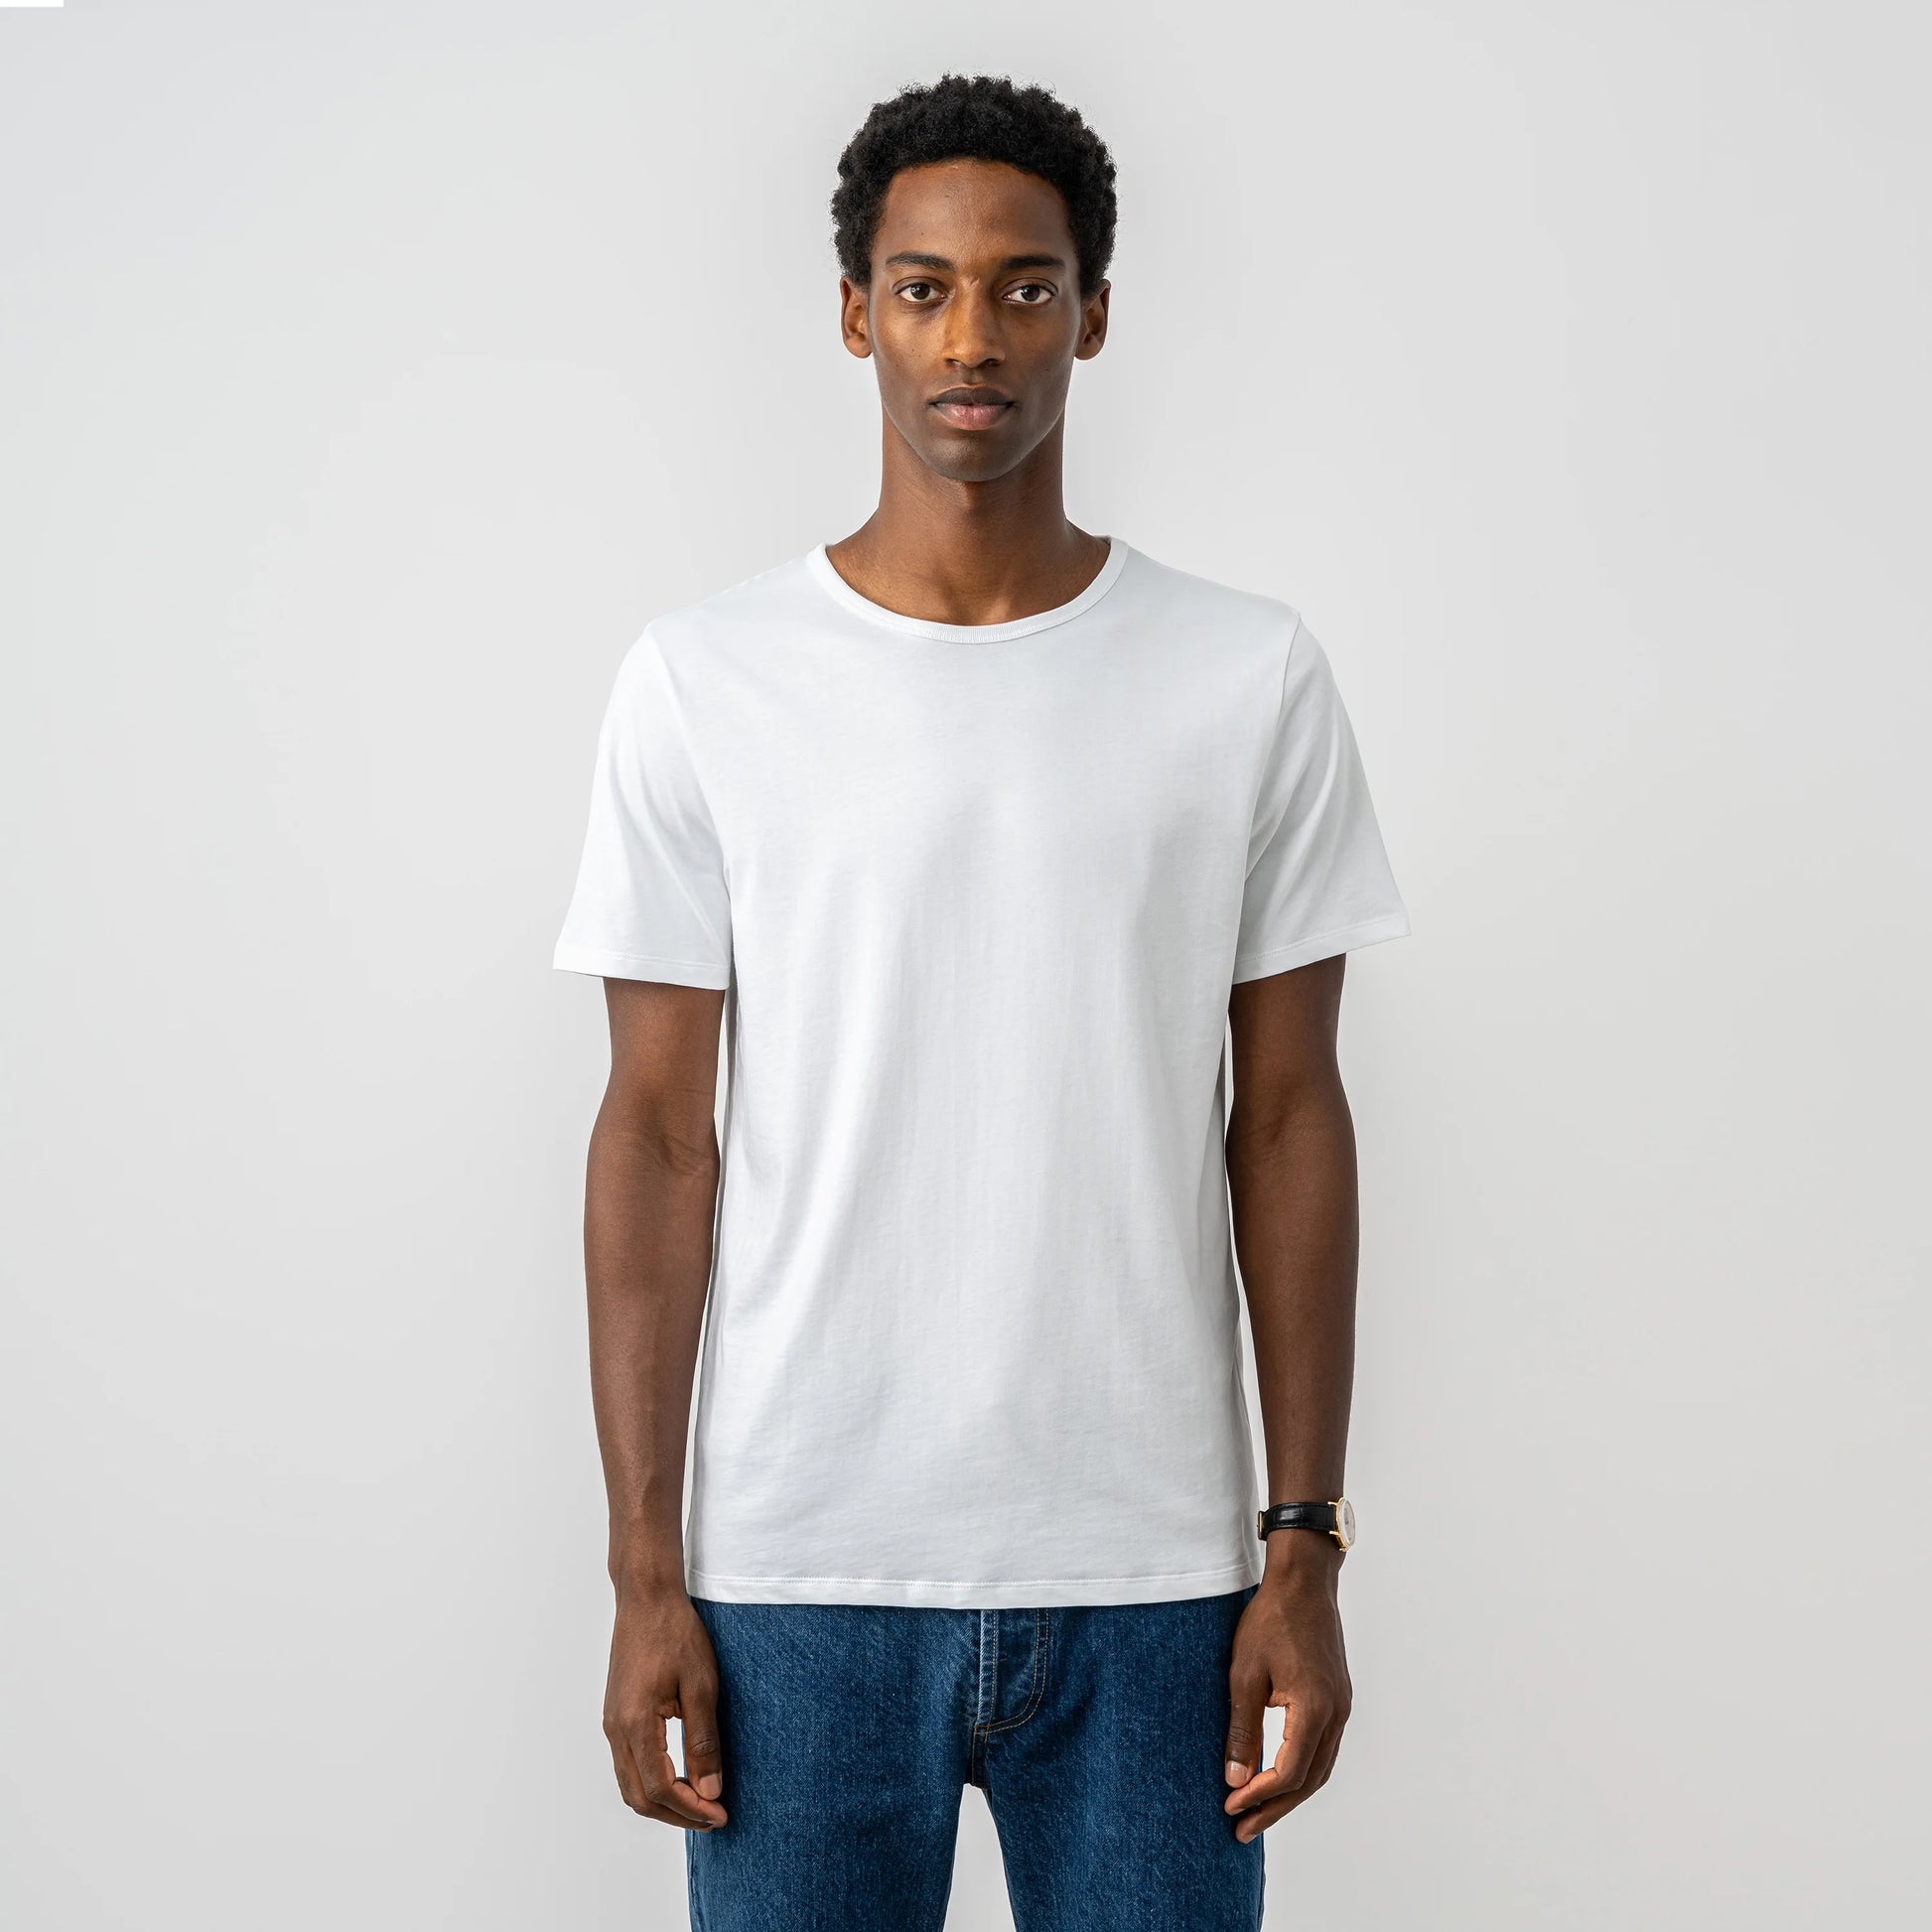 Men's Classic T-Shirt White - Organic Cotton | ISTO.